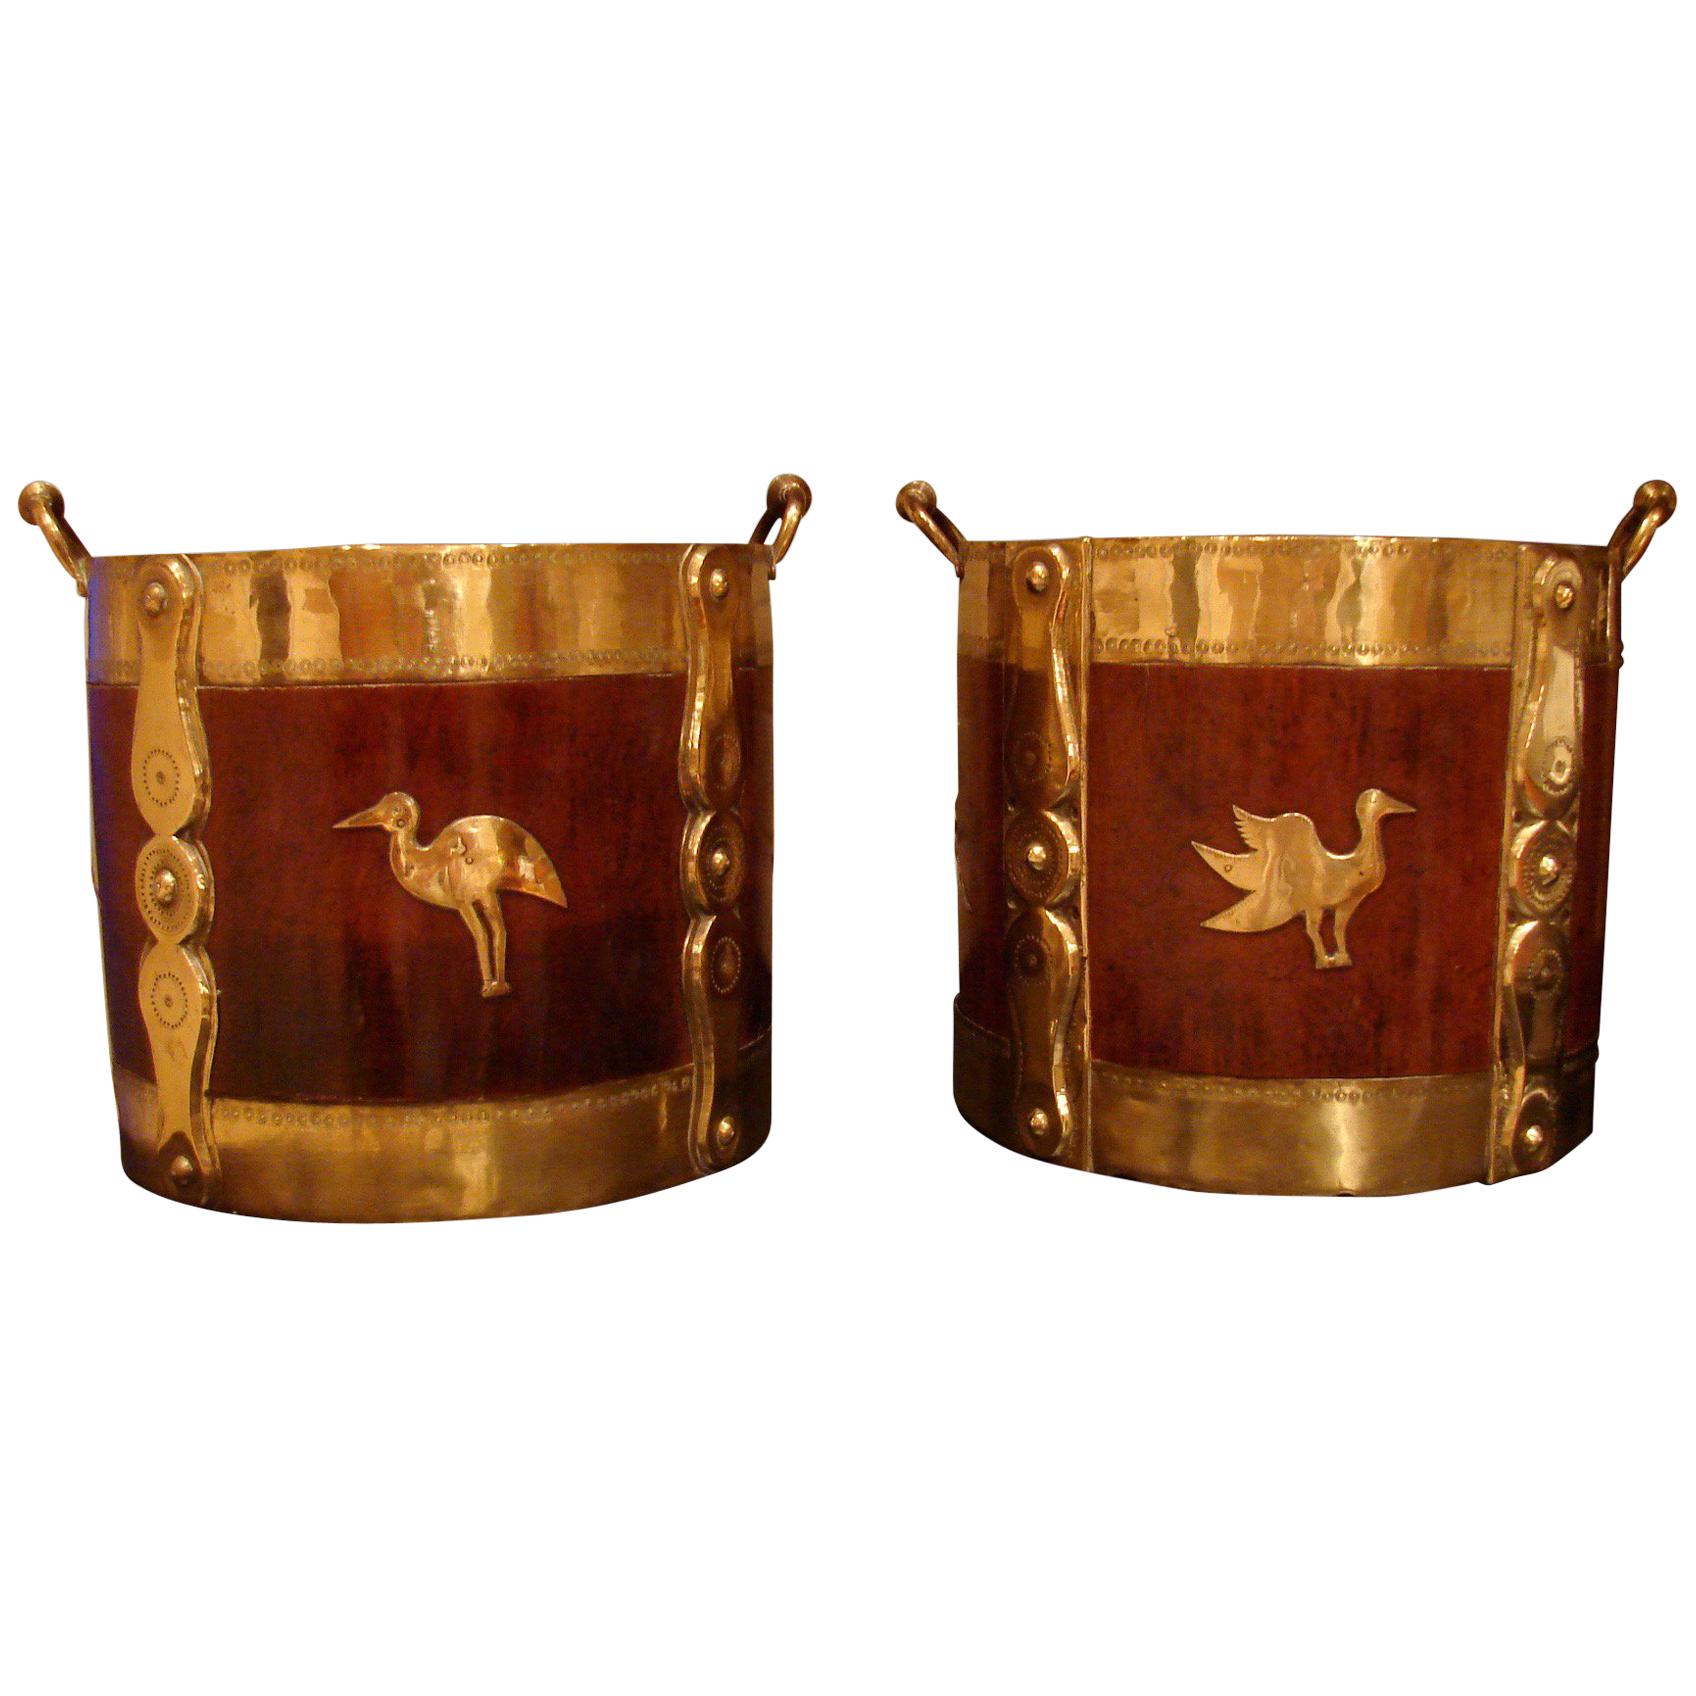 2 Anglo-Indian Hardwood Brass Mounted Buckets